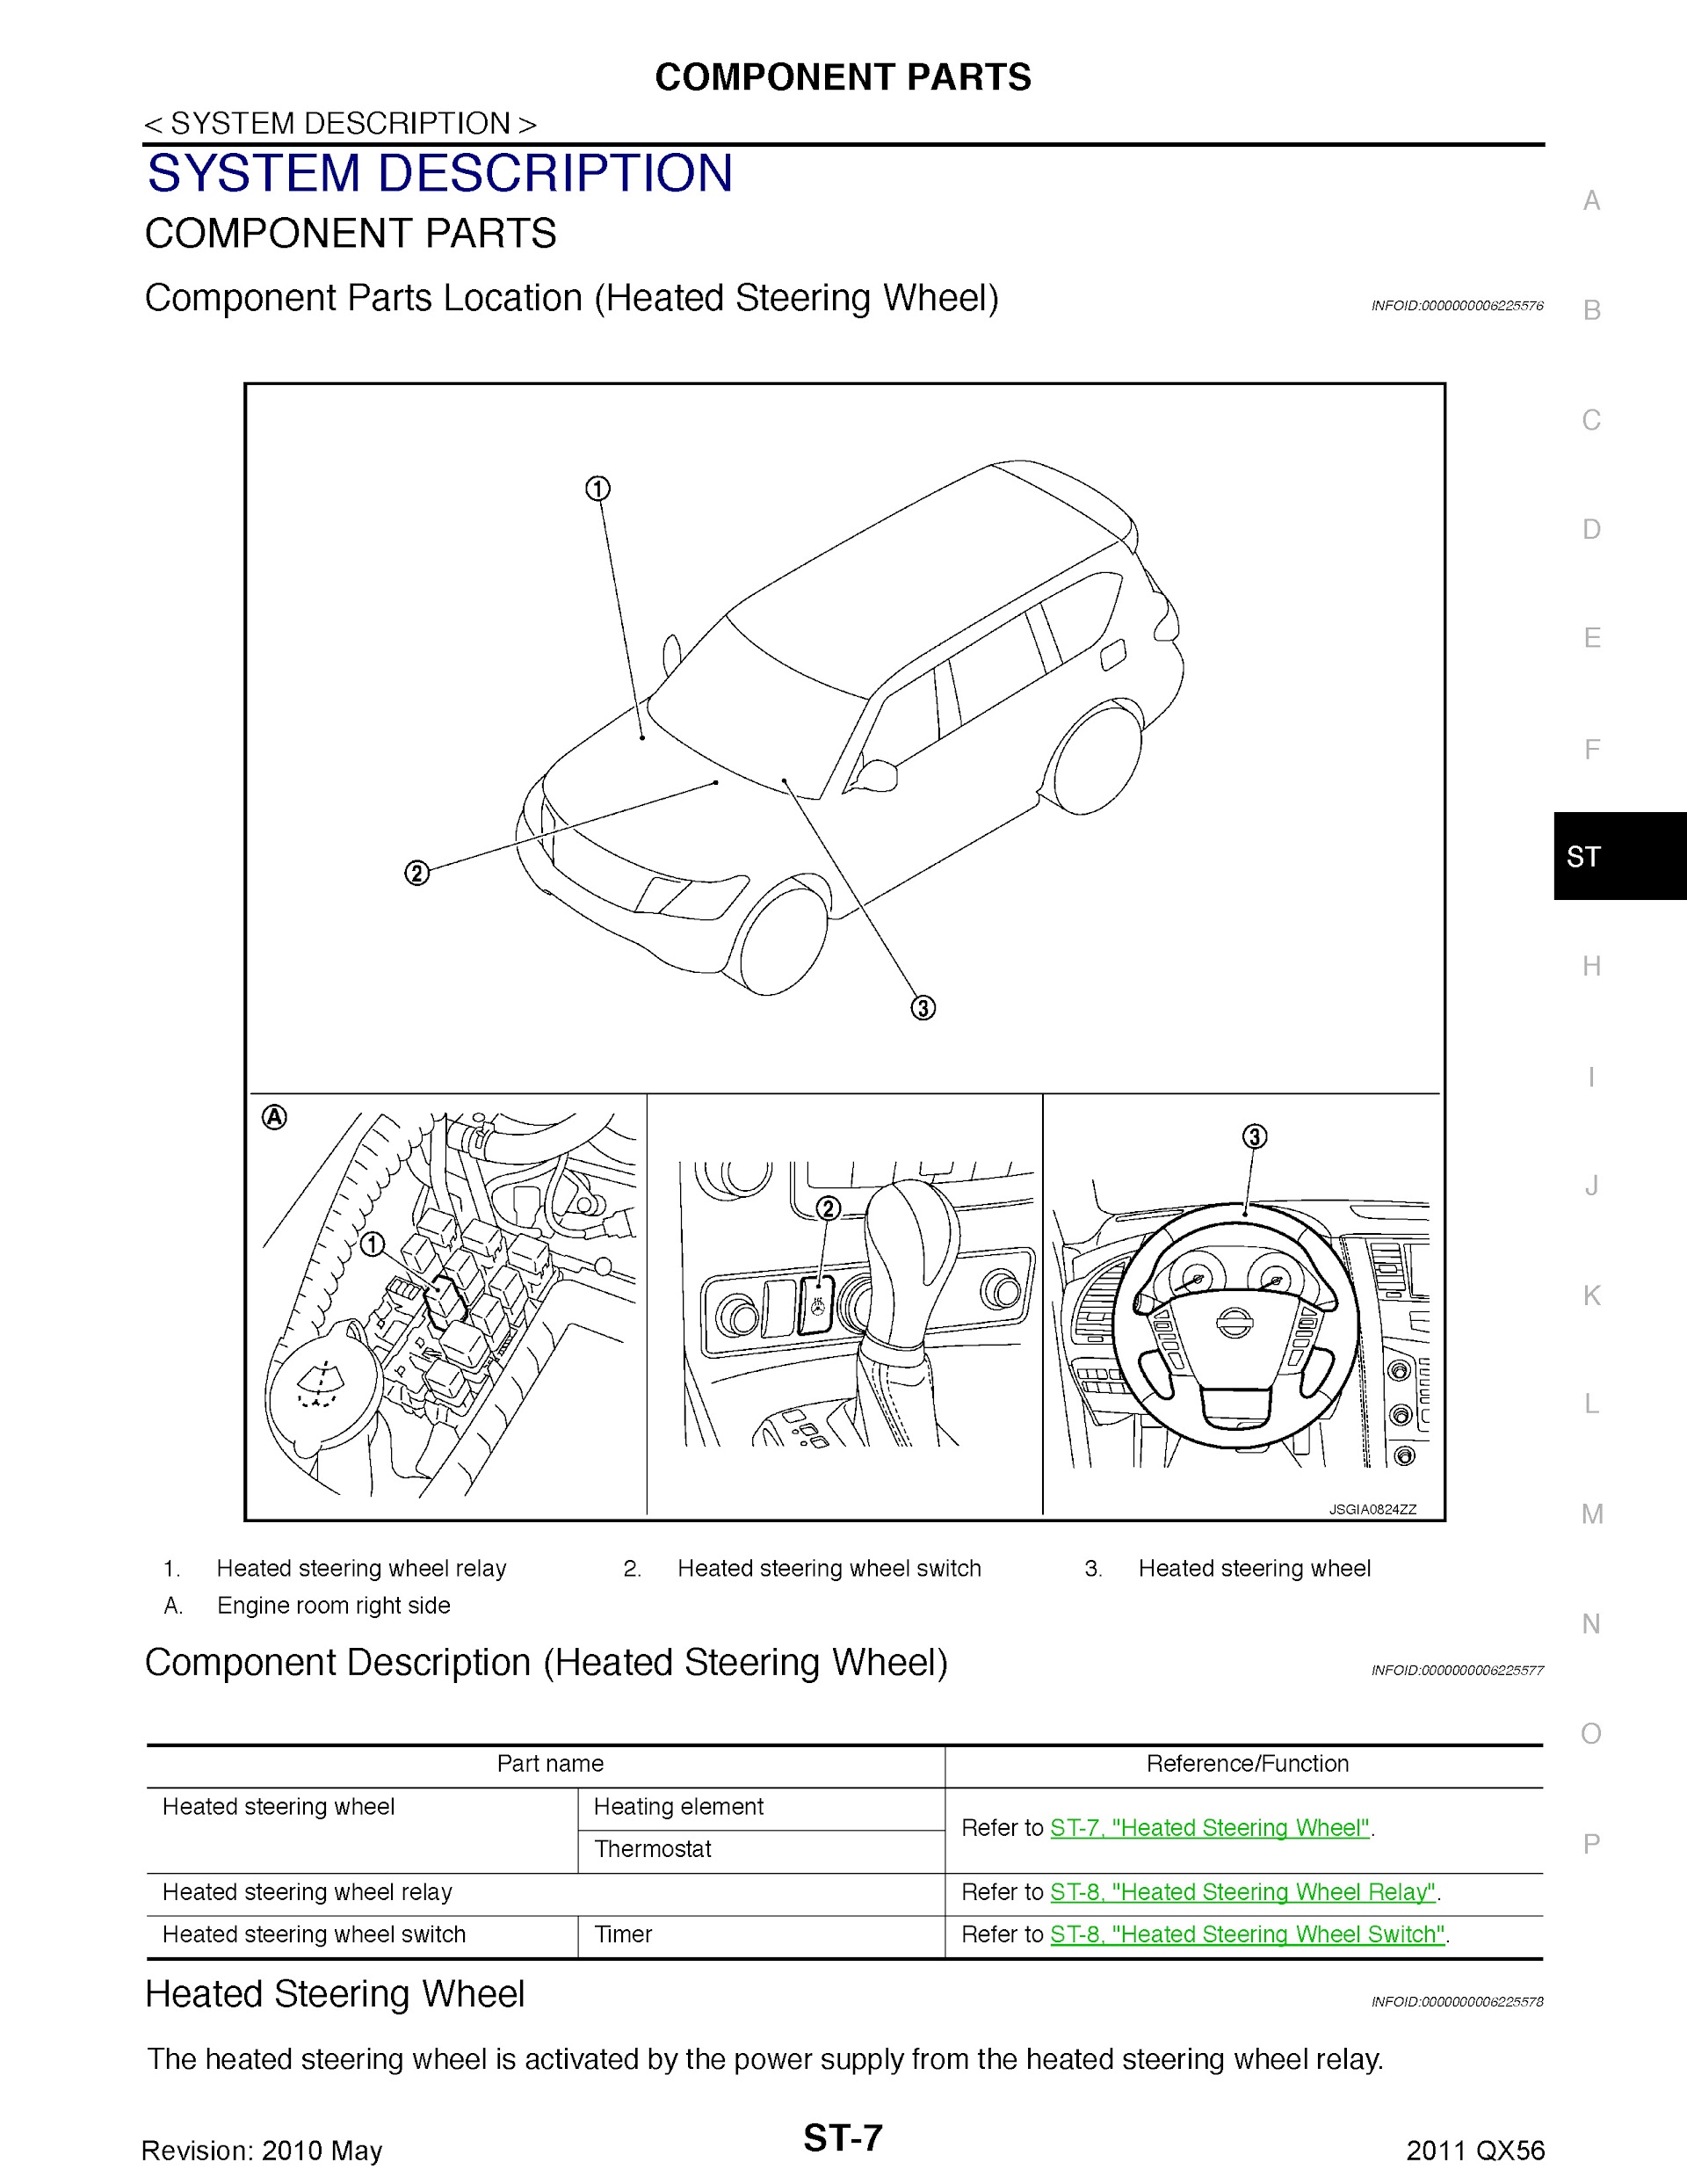 2011 Infiniti QX56 Repair Manual, heated Steering Wheel